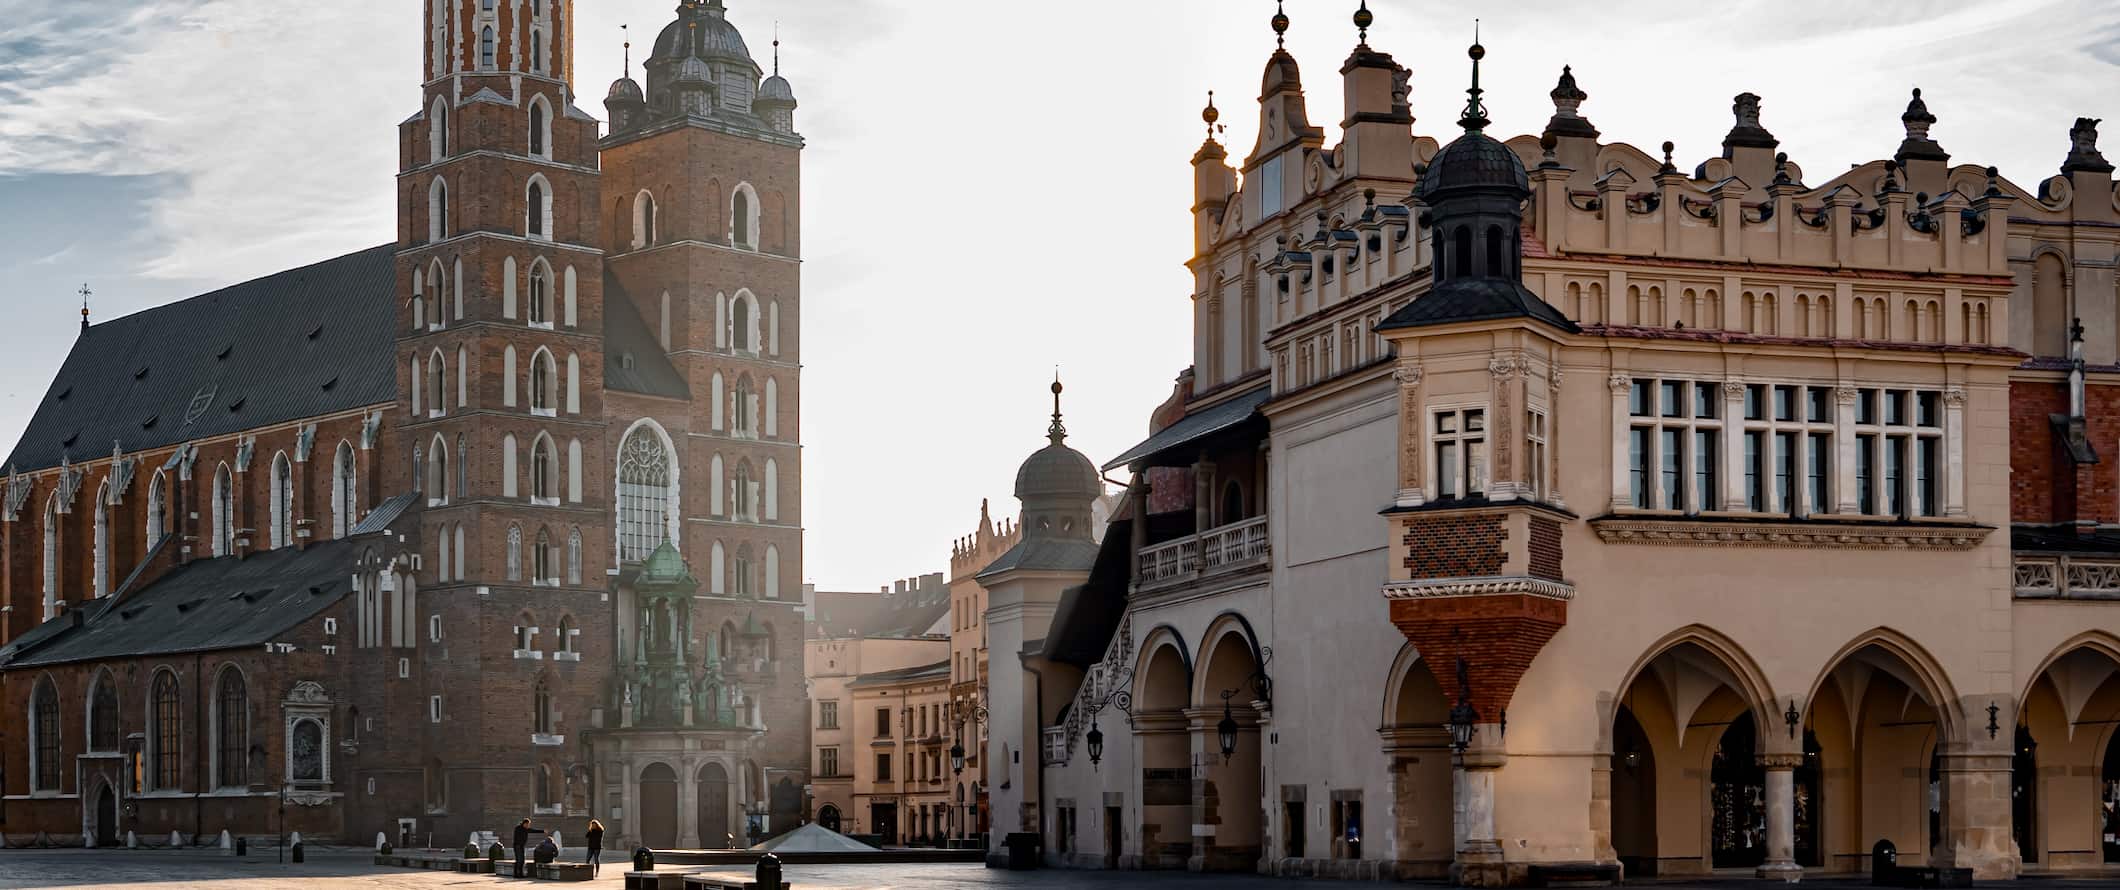 Historic buildings near the Old Town of Krakow, Poland